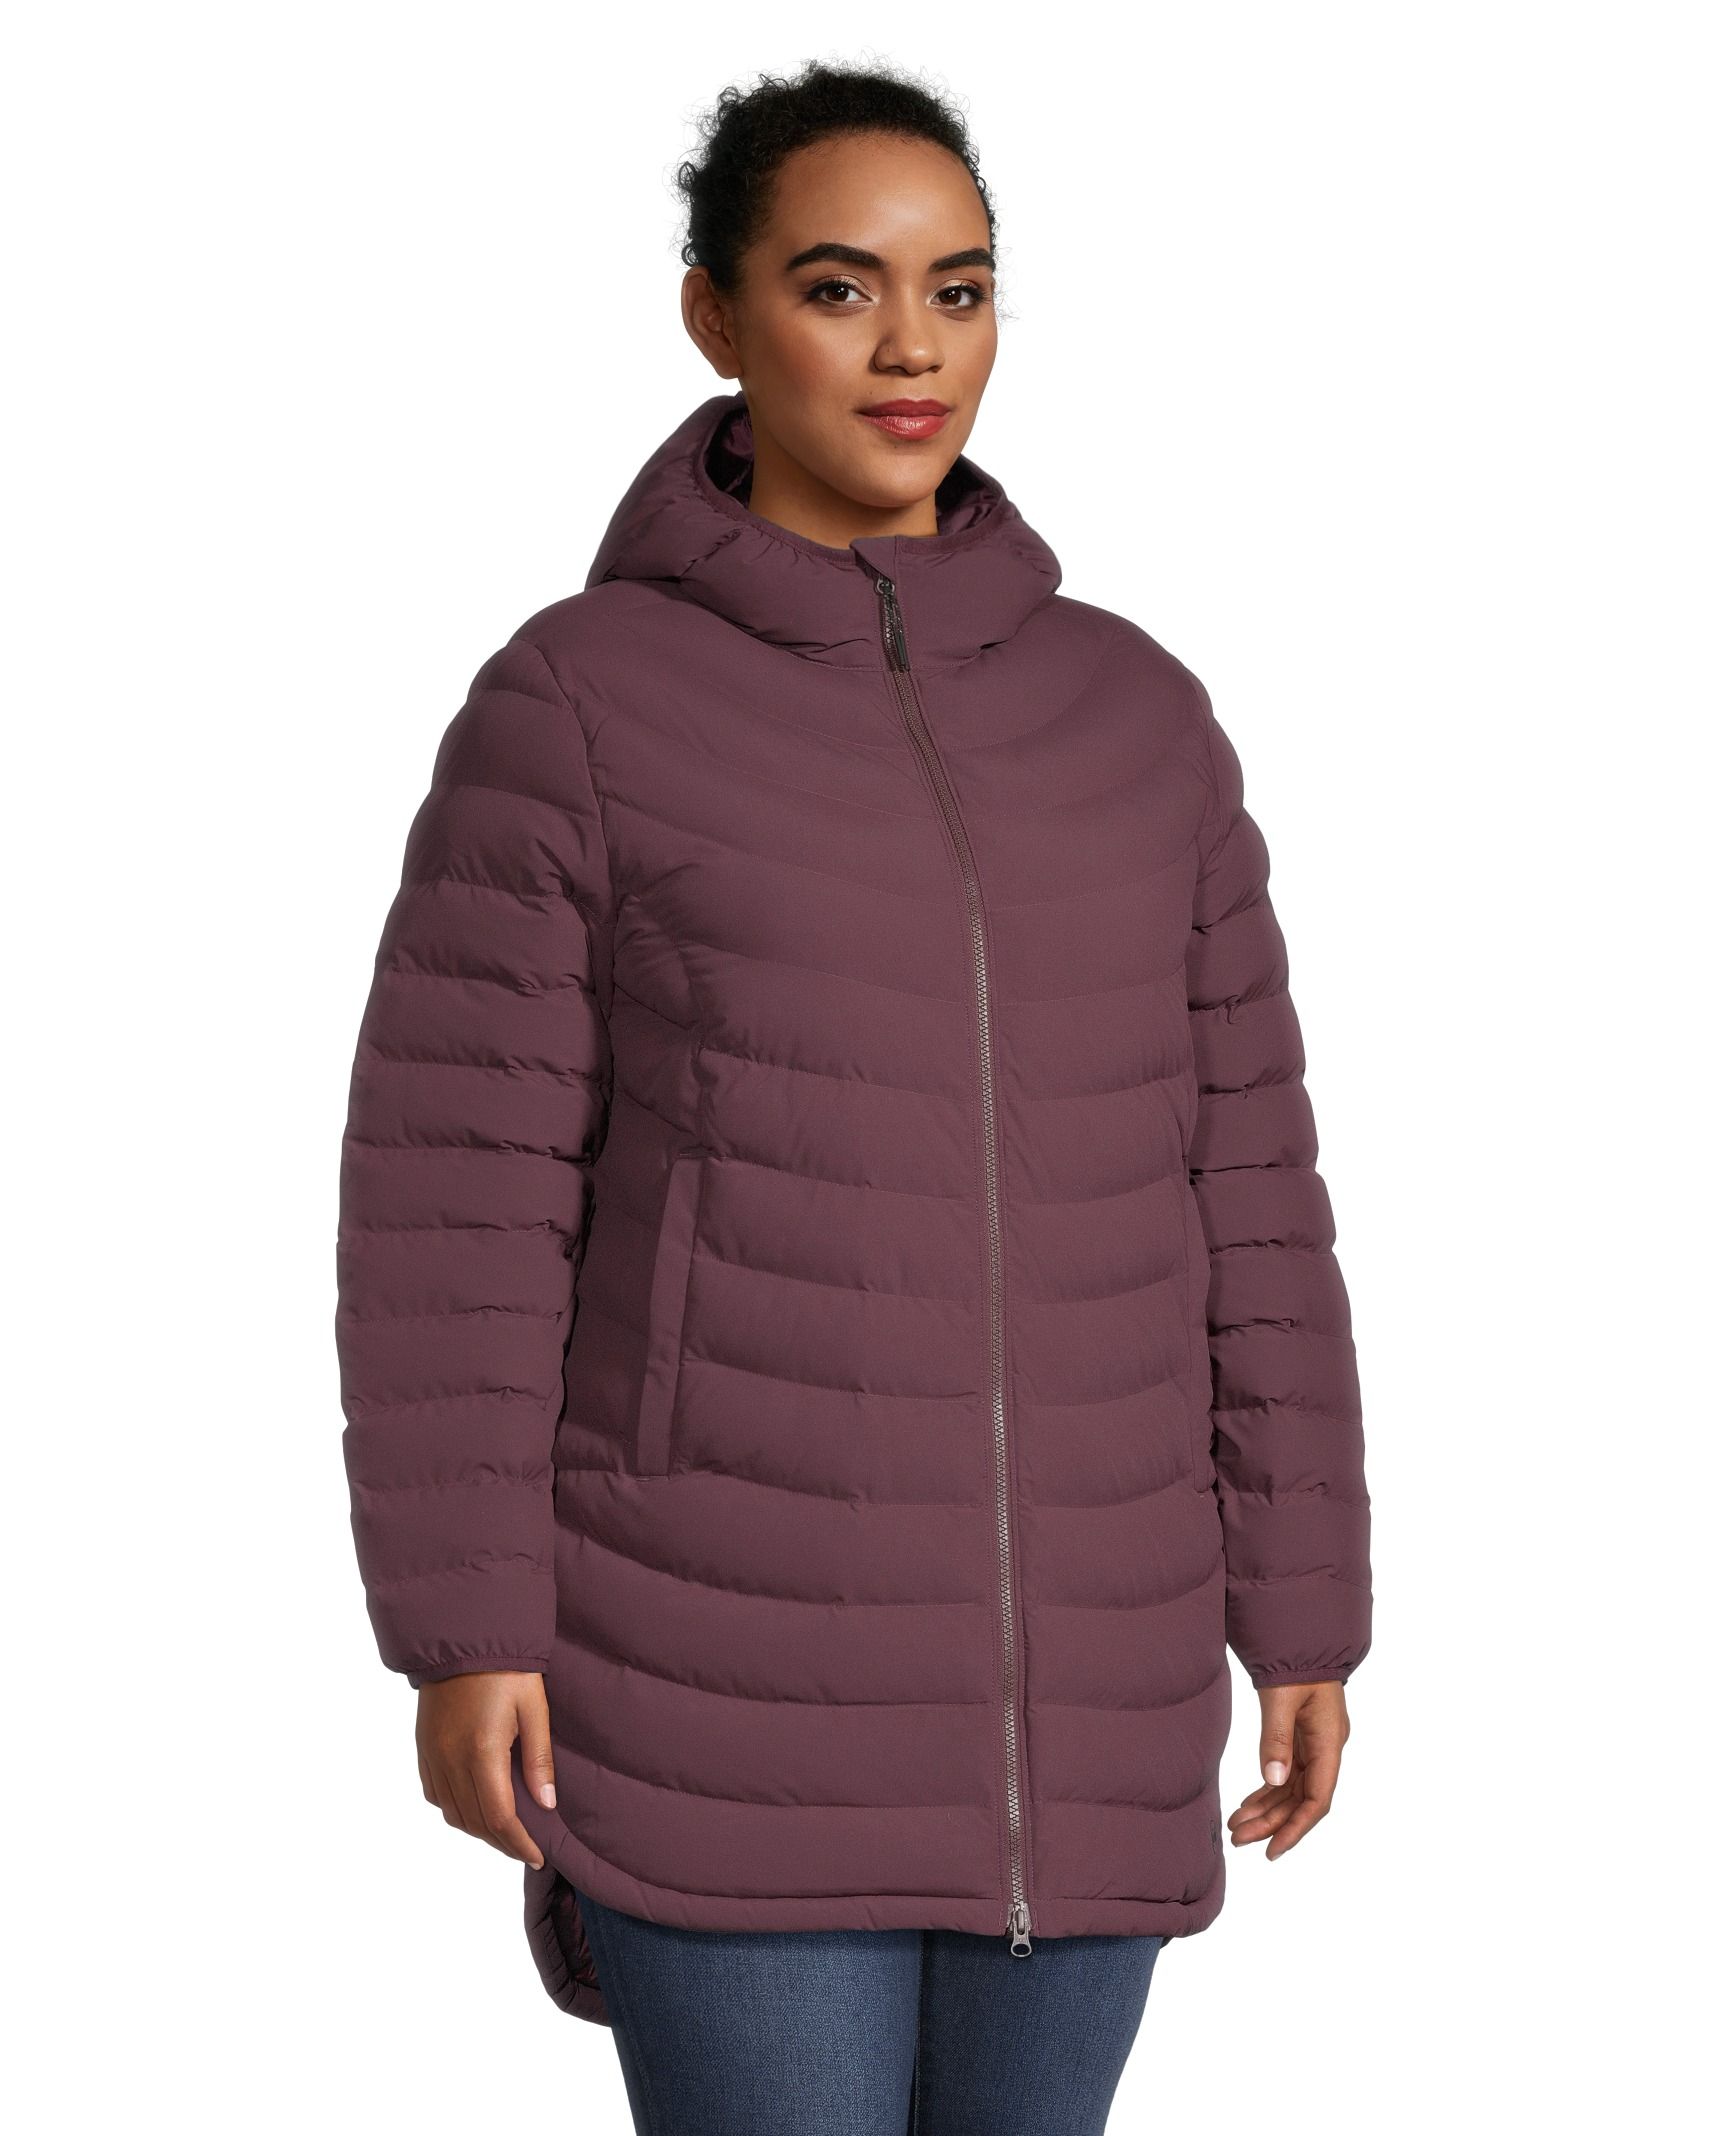 FeatherLite Women's Micro Fleece Full-Zip Jacket XL Onyx Black at   Women's Coats Shop